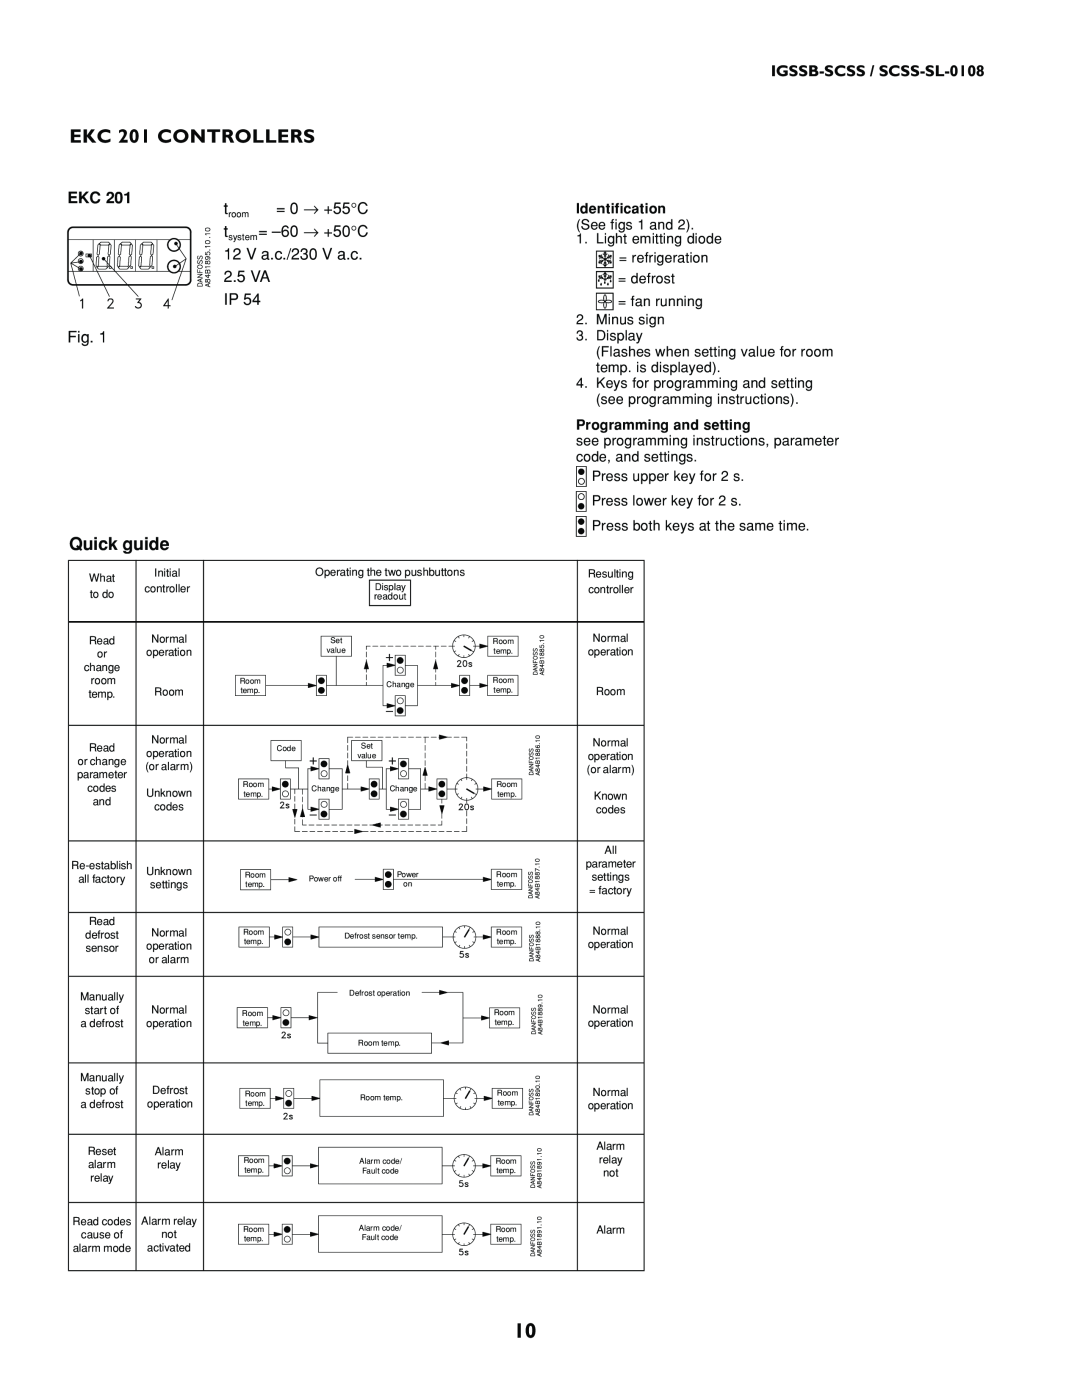 hussman EKC 201 CONTROLLERS, Quick guide, IGSSB-SCSS / SCSS-SL-0108, 12 V a.c./230 V a.c 2.5 VA IP, → +55C, → +50C 